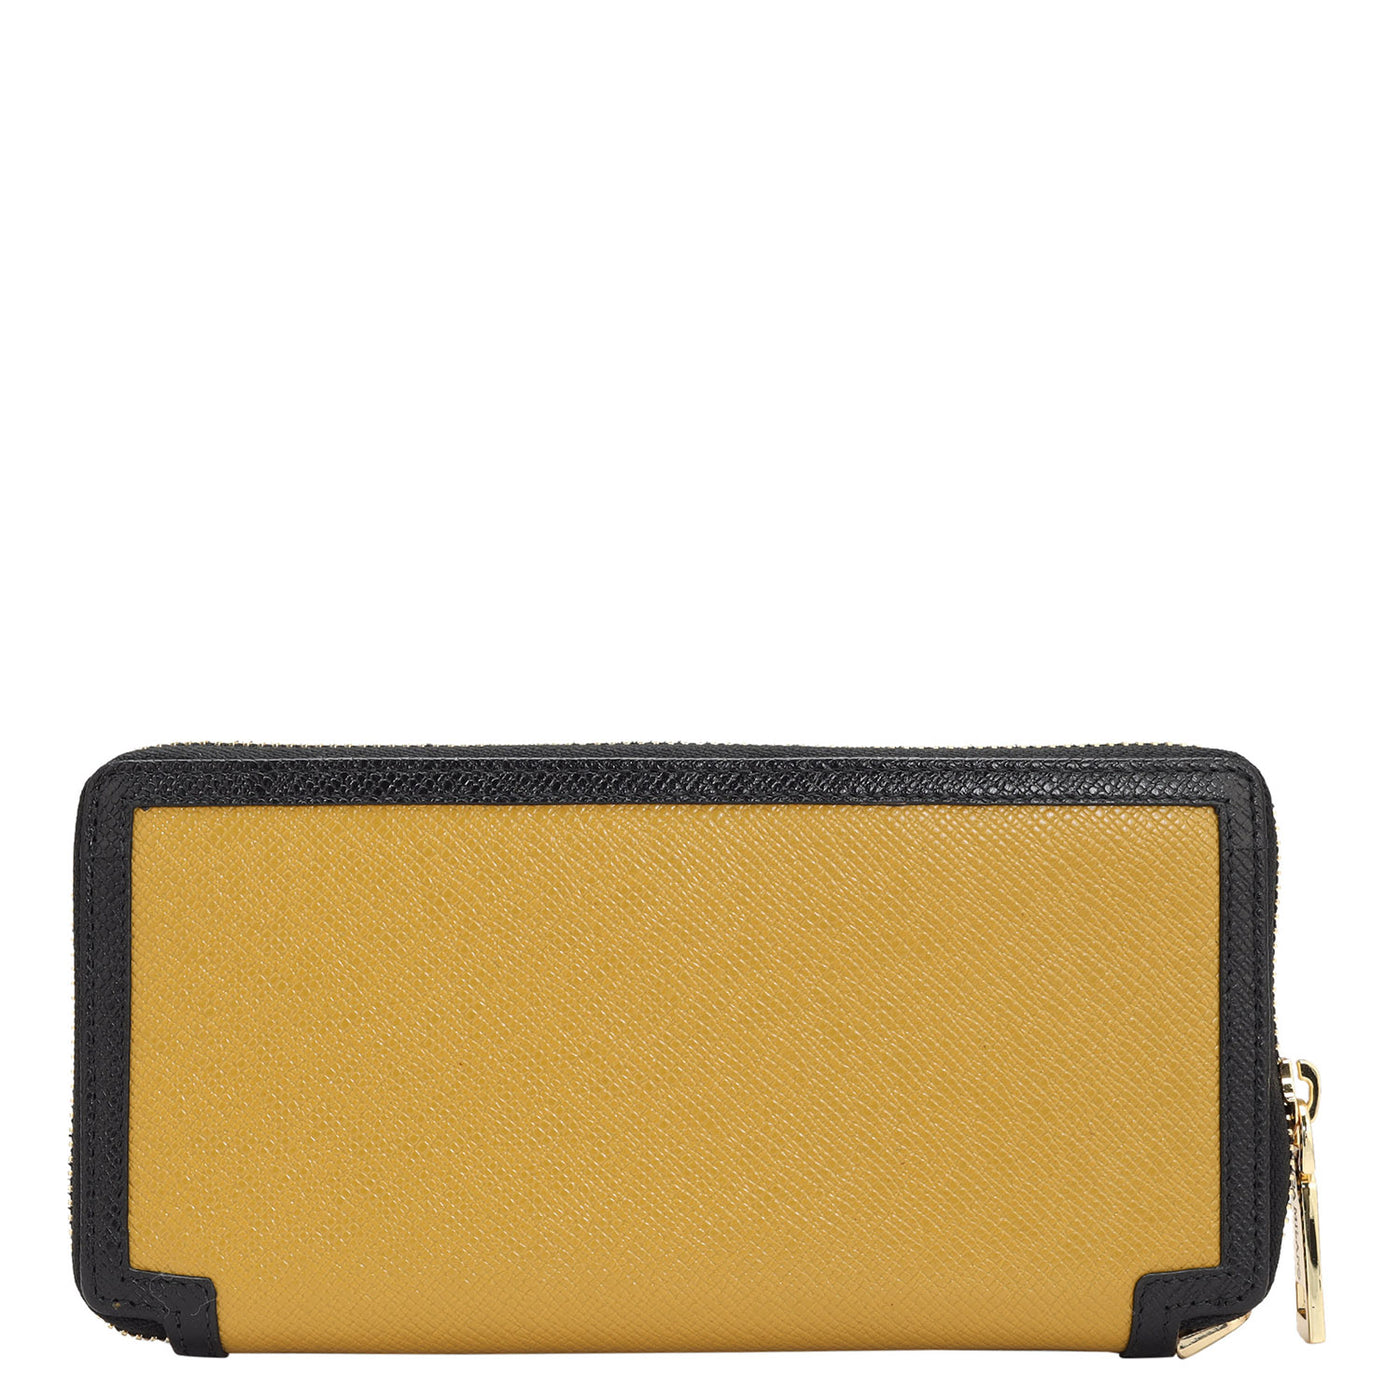 Franzy Leather Ladies Wallet - Mustard